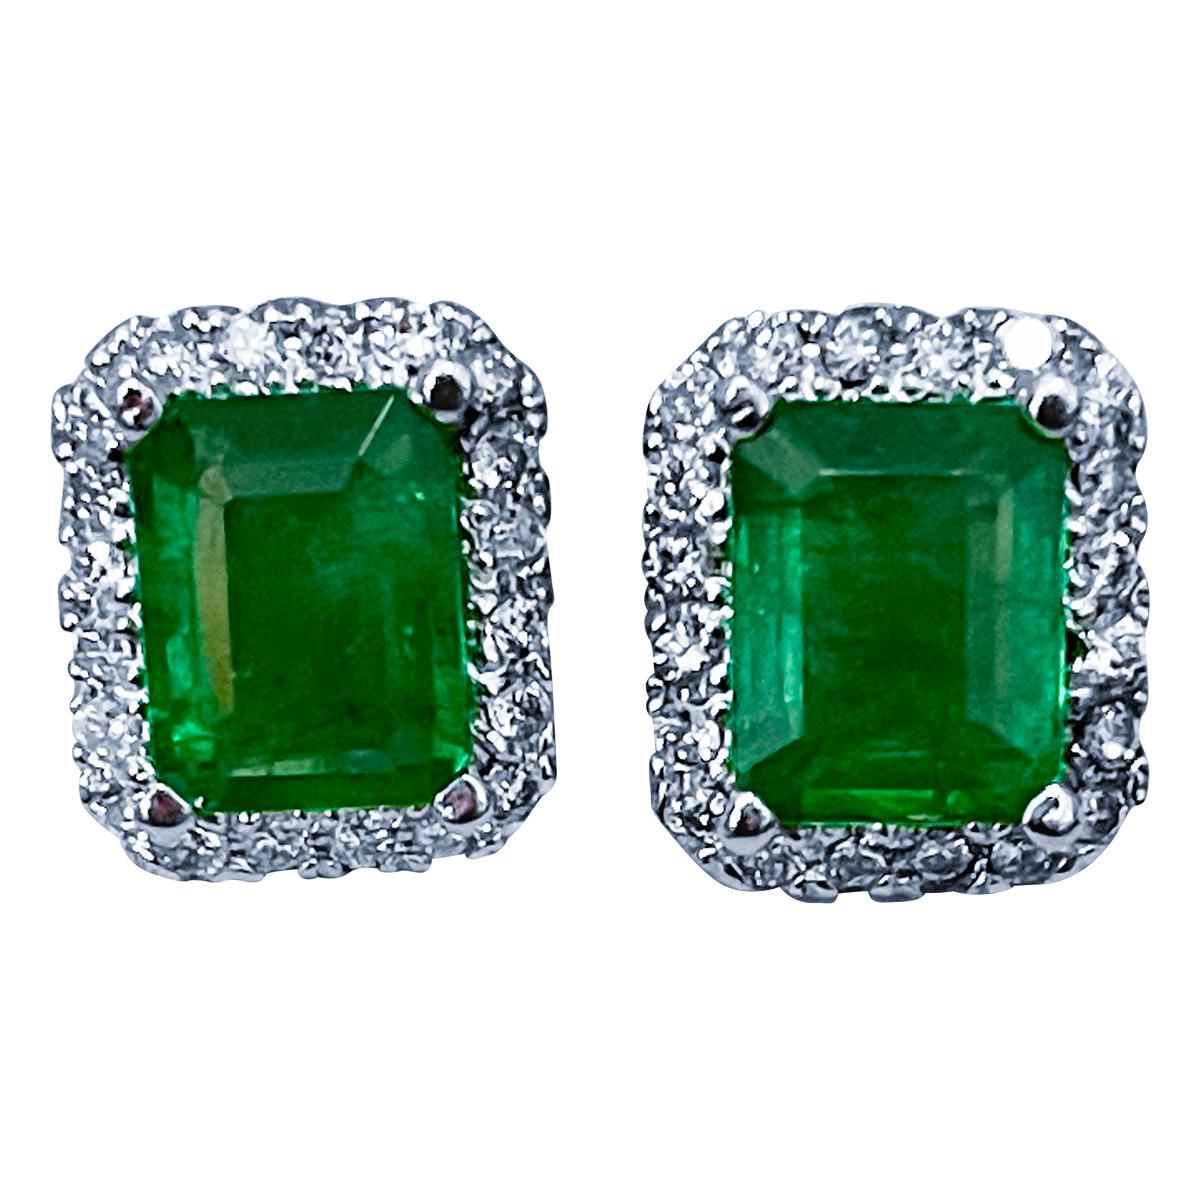 6.5 Carat Emerald Cut Emerald & 1.25 Ct Diamond Stud Earrings 14 Kt White Gold